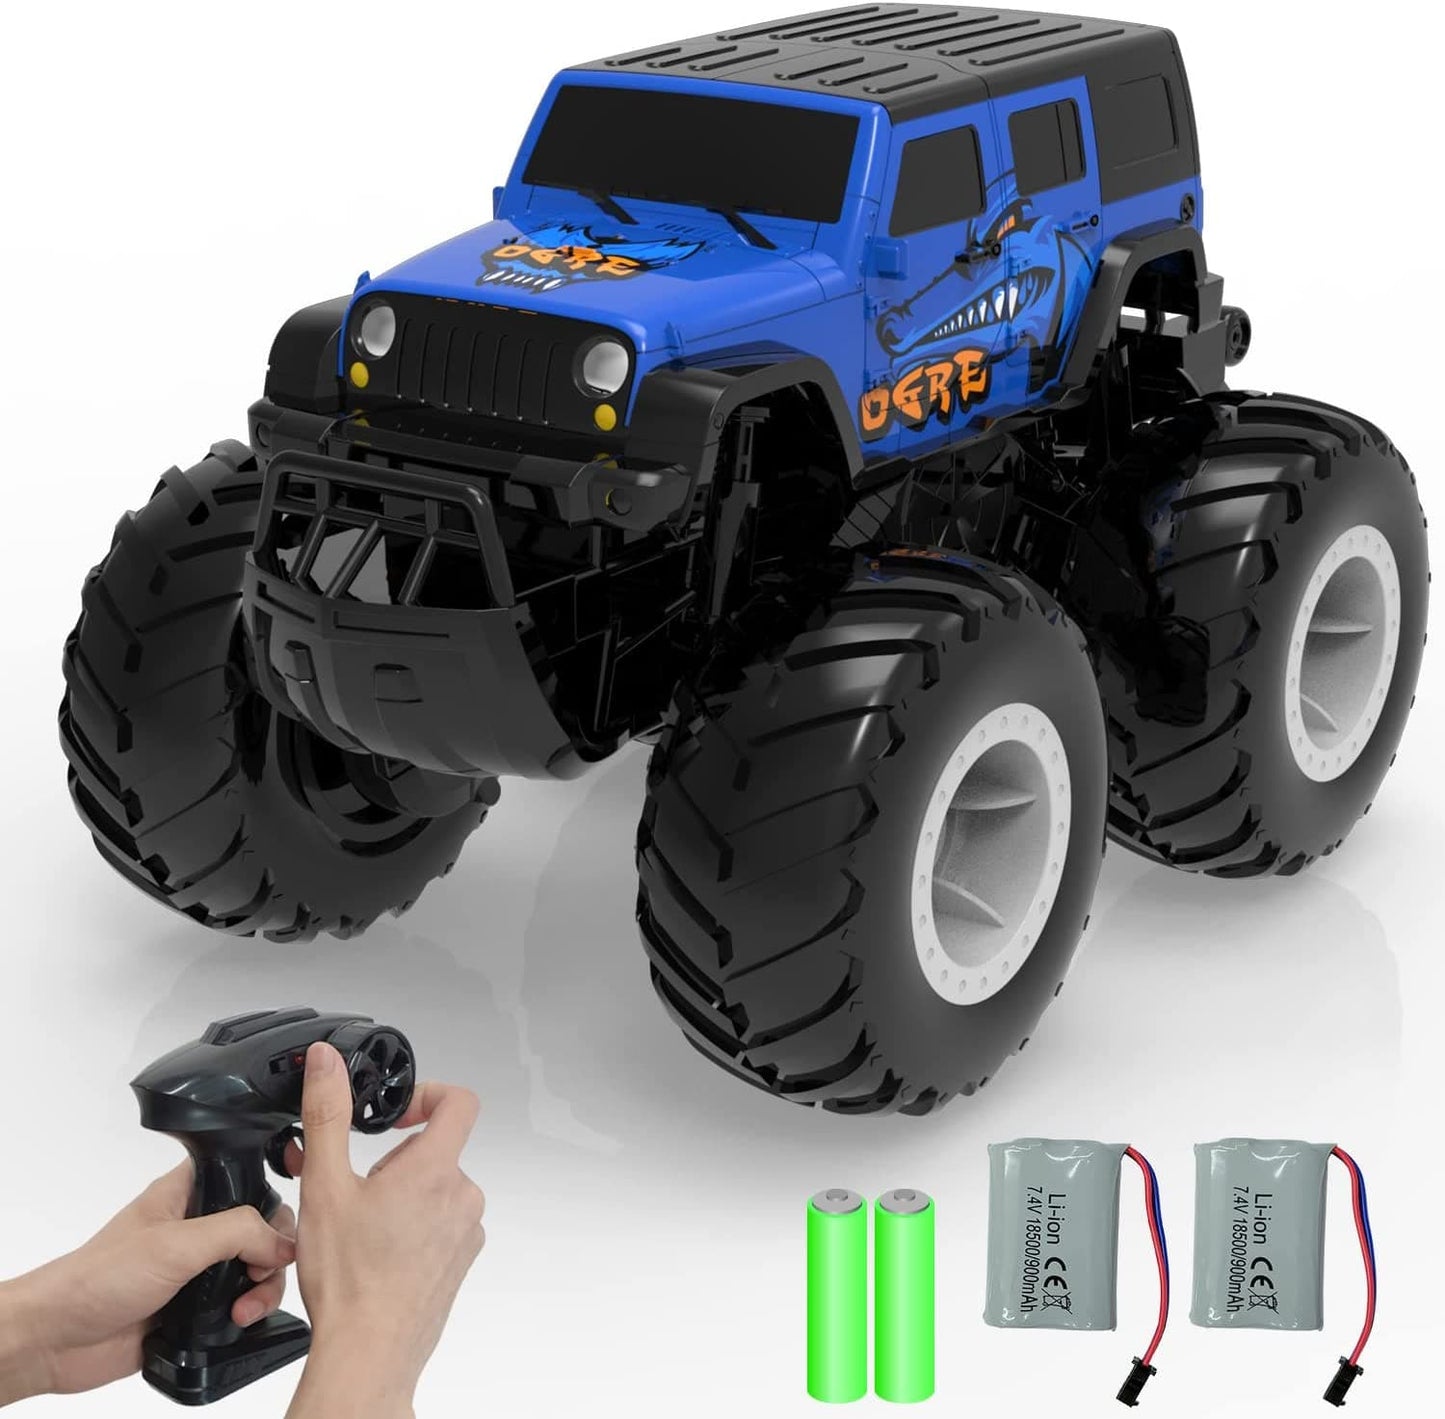 Amphibious Remote Control Car All Terrain Off-Road Waterproof RC Monster Truck for Kids (Blue) 2 pcs Batteries